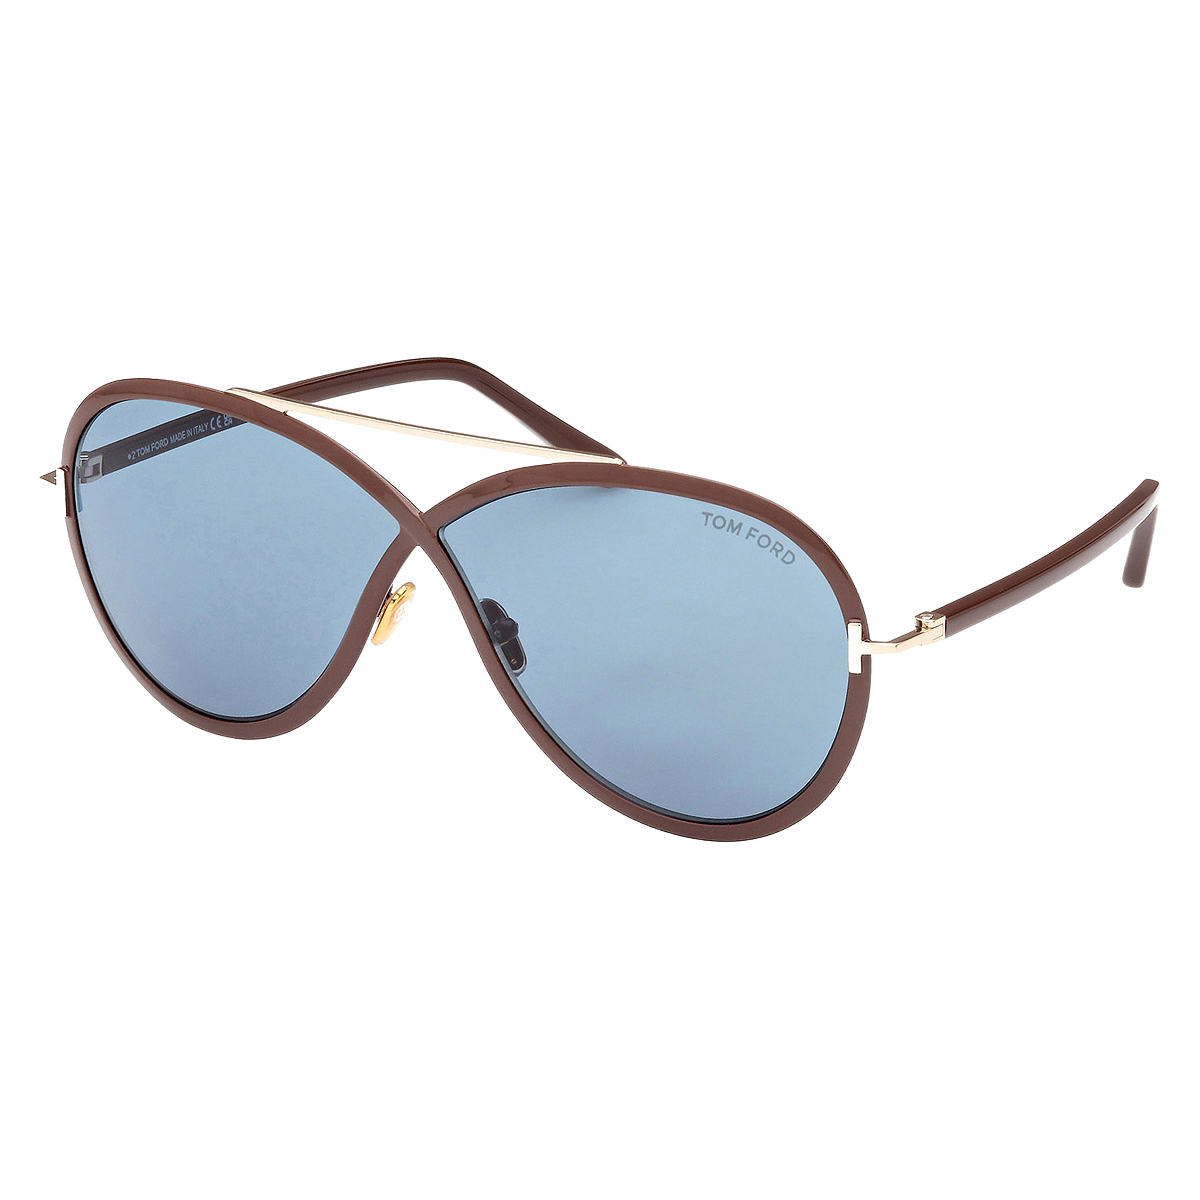 Tom Ford Sunglasses Tom Ford Sunglasses FT1007 48V 65mm Rickie Eyeglasses Eyewear UK USA Australia 